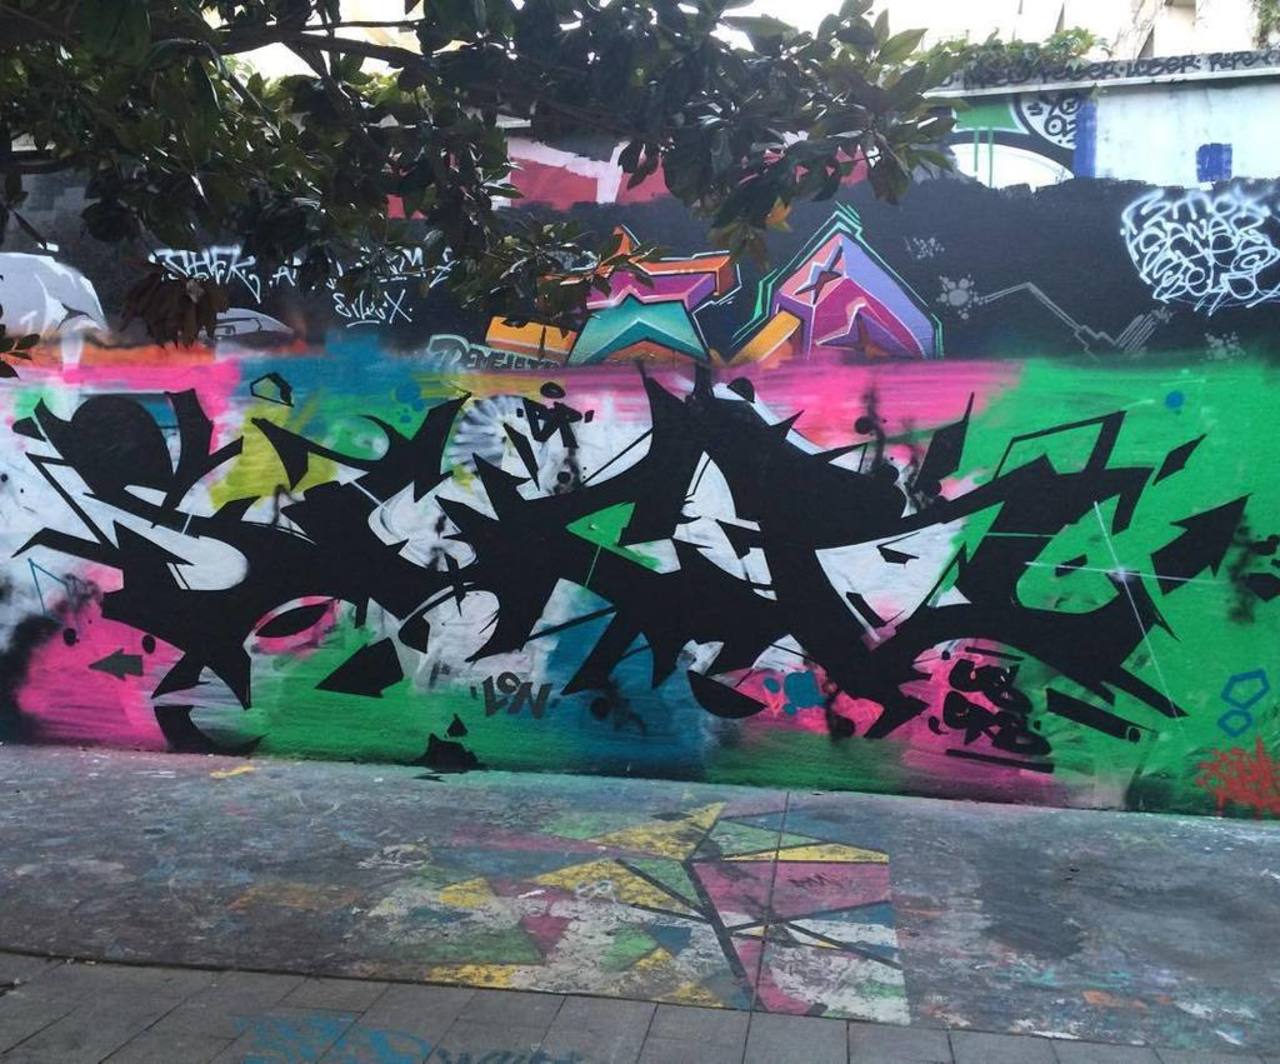 RT @artpushr: via #insta_fdy "http://ift.tt/1WrmiH3" #graffiti #streetart http://t.co/cxsgUMVWP0